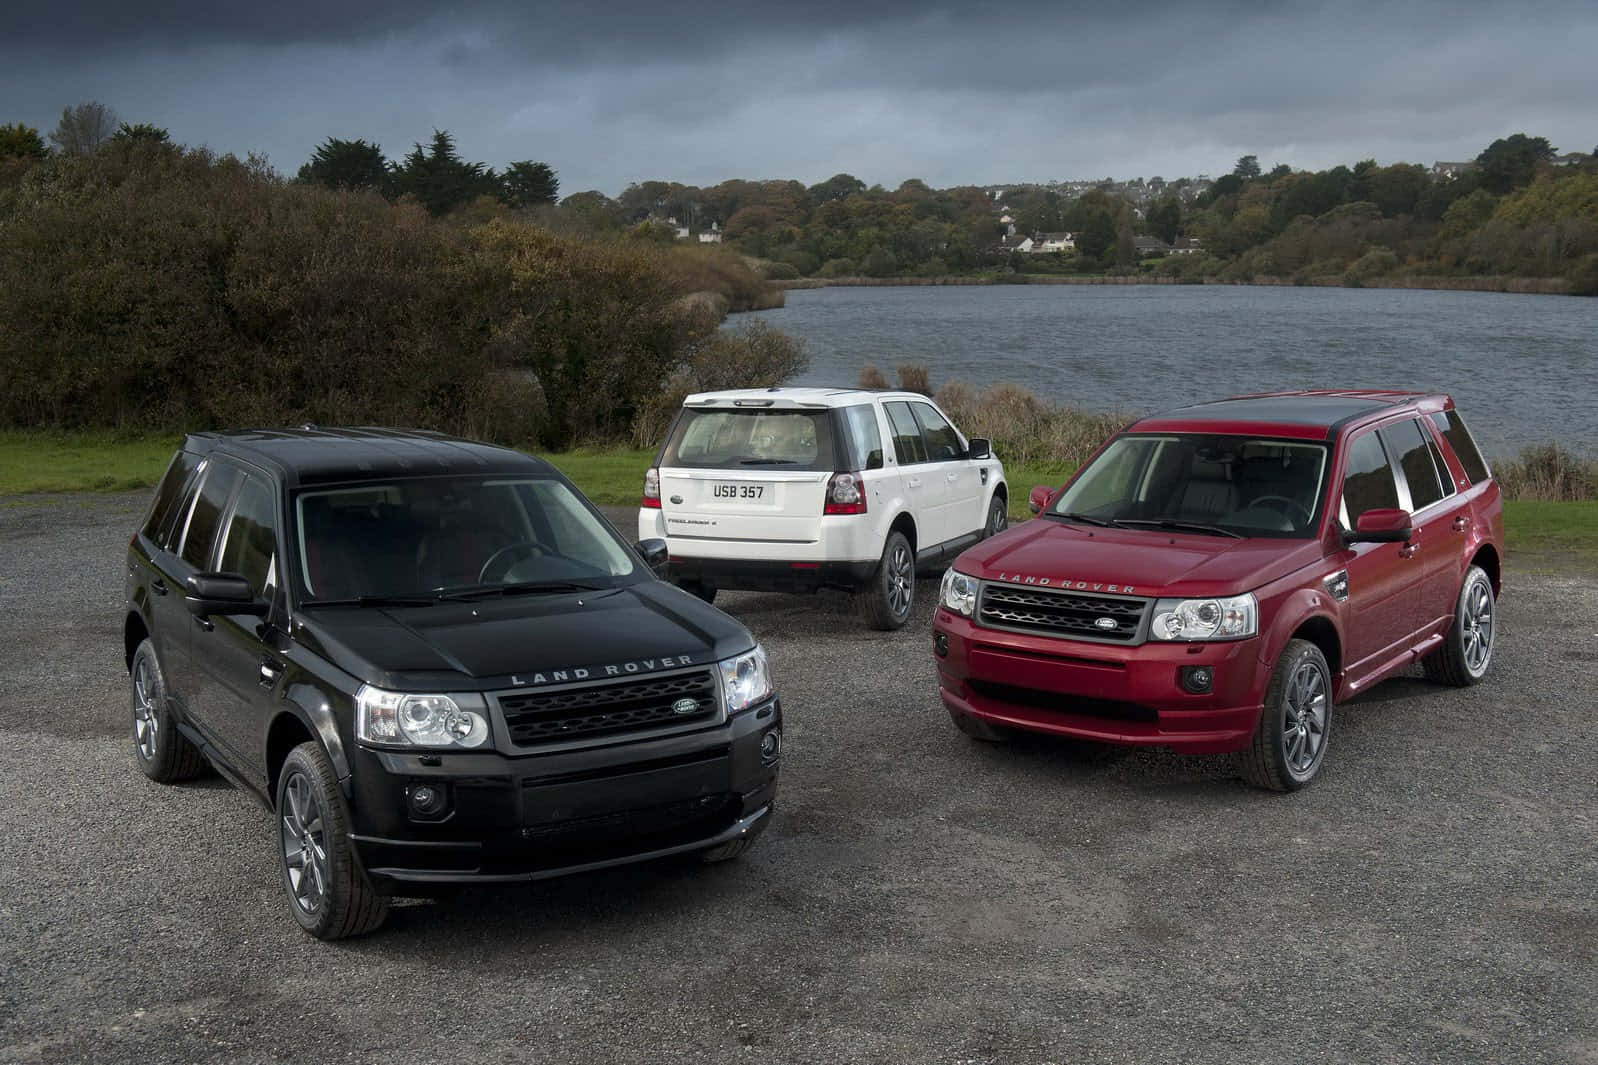 Land Rover Freelander conquering the off-road terrain Wallpaper